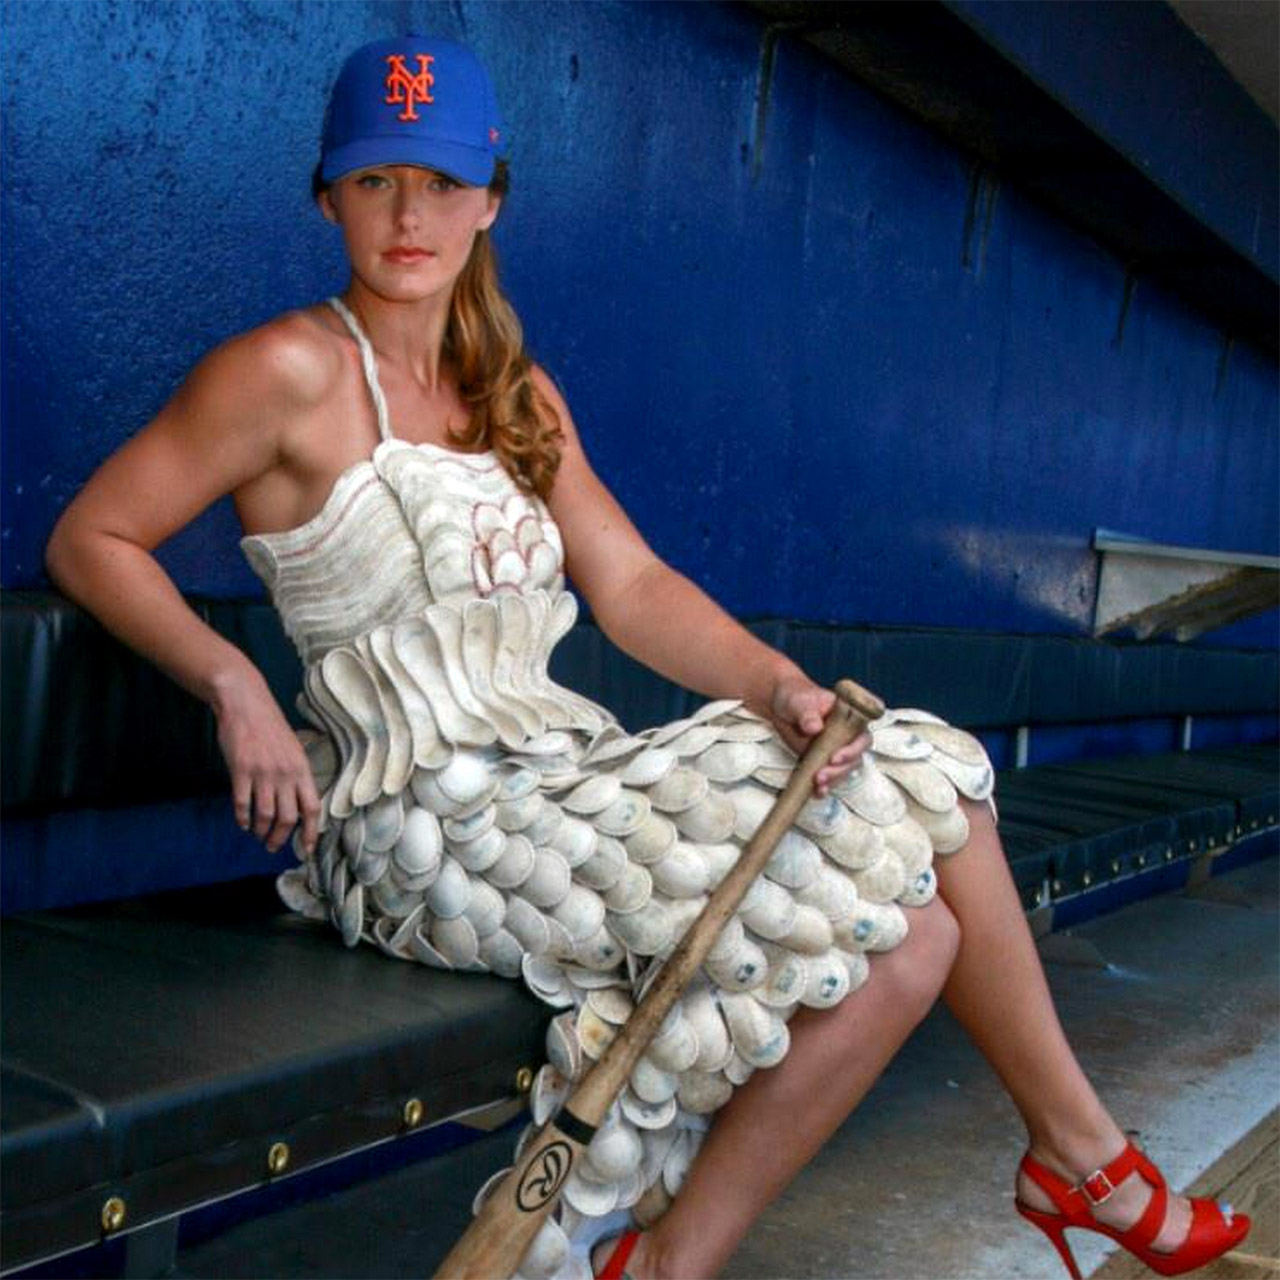 Dress made out of baseballs by artist Jennifer Hitchner